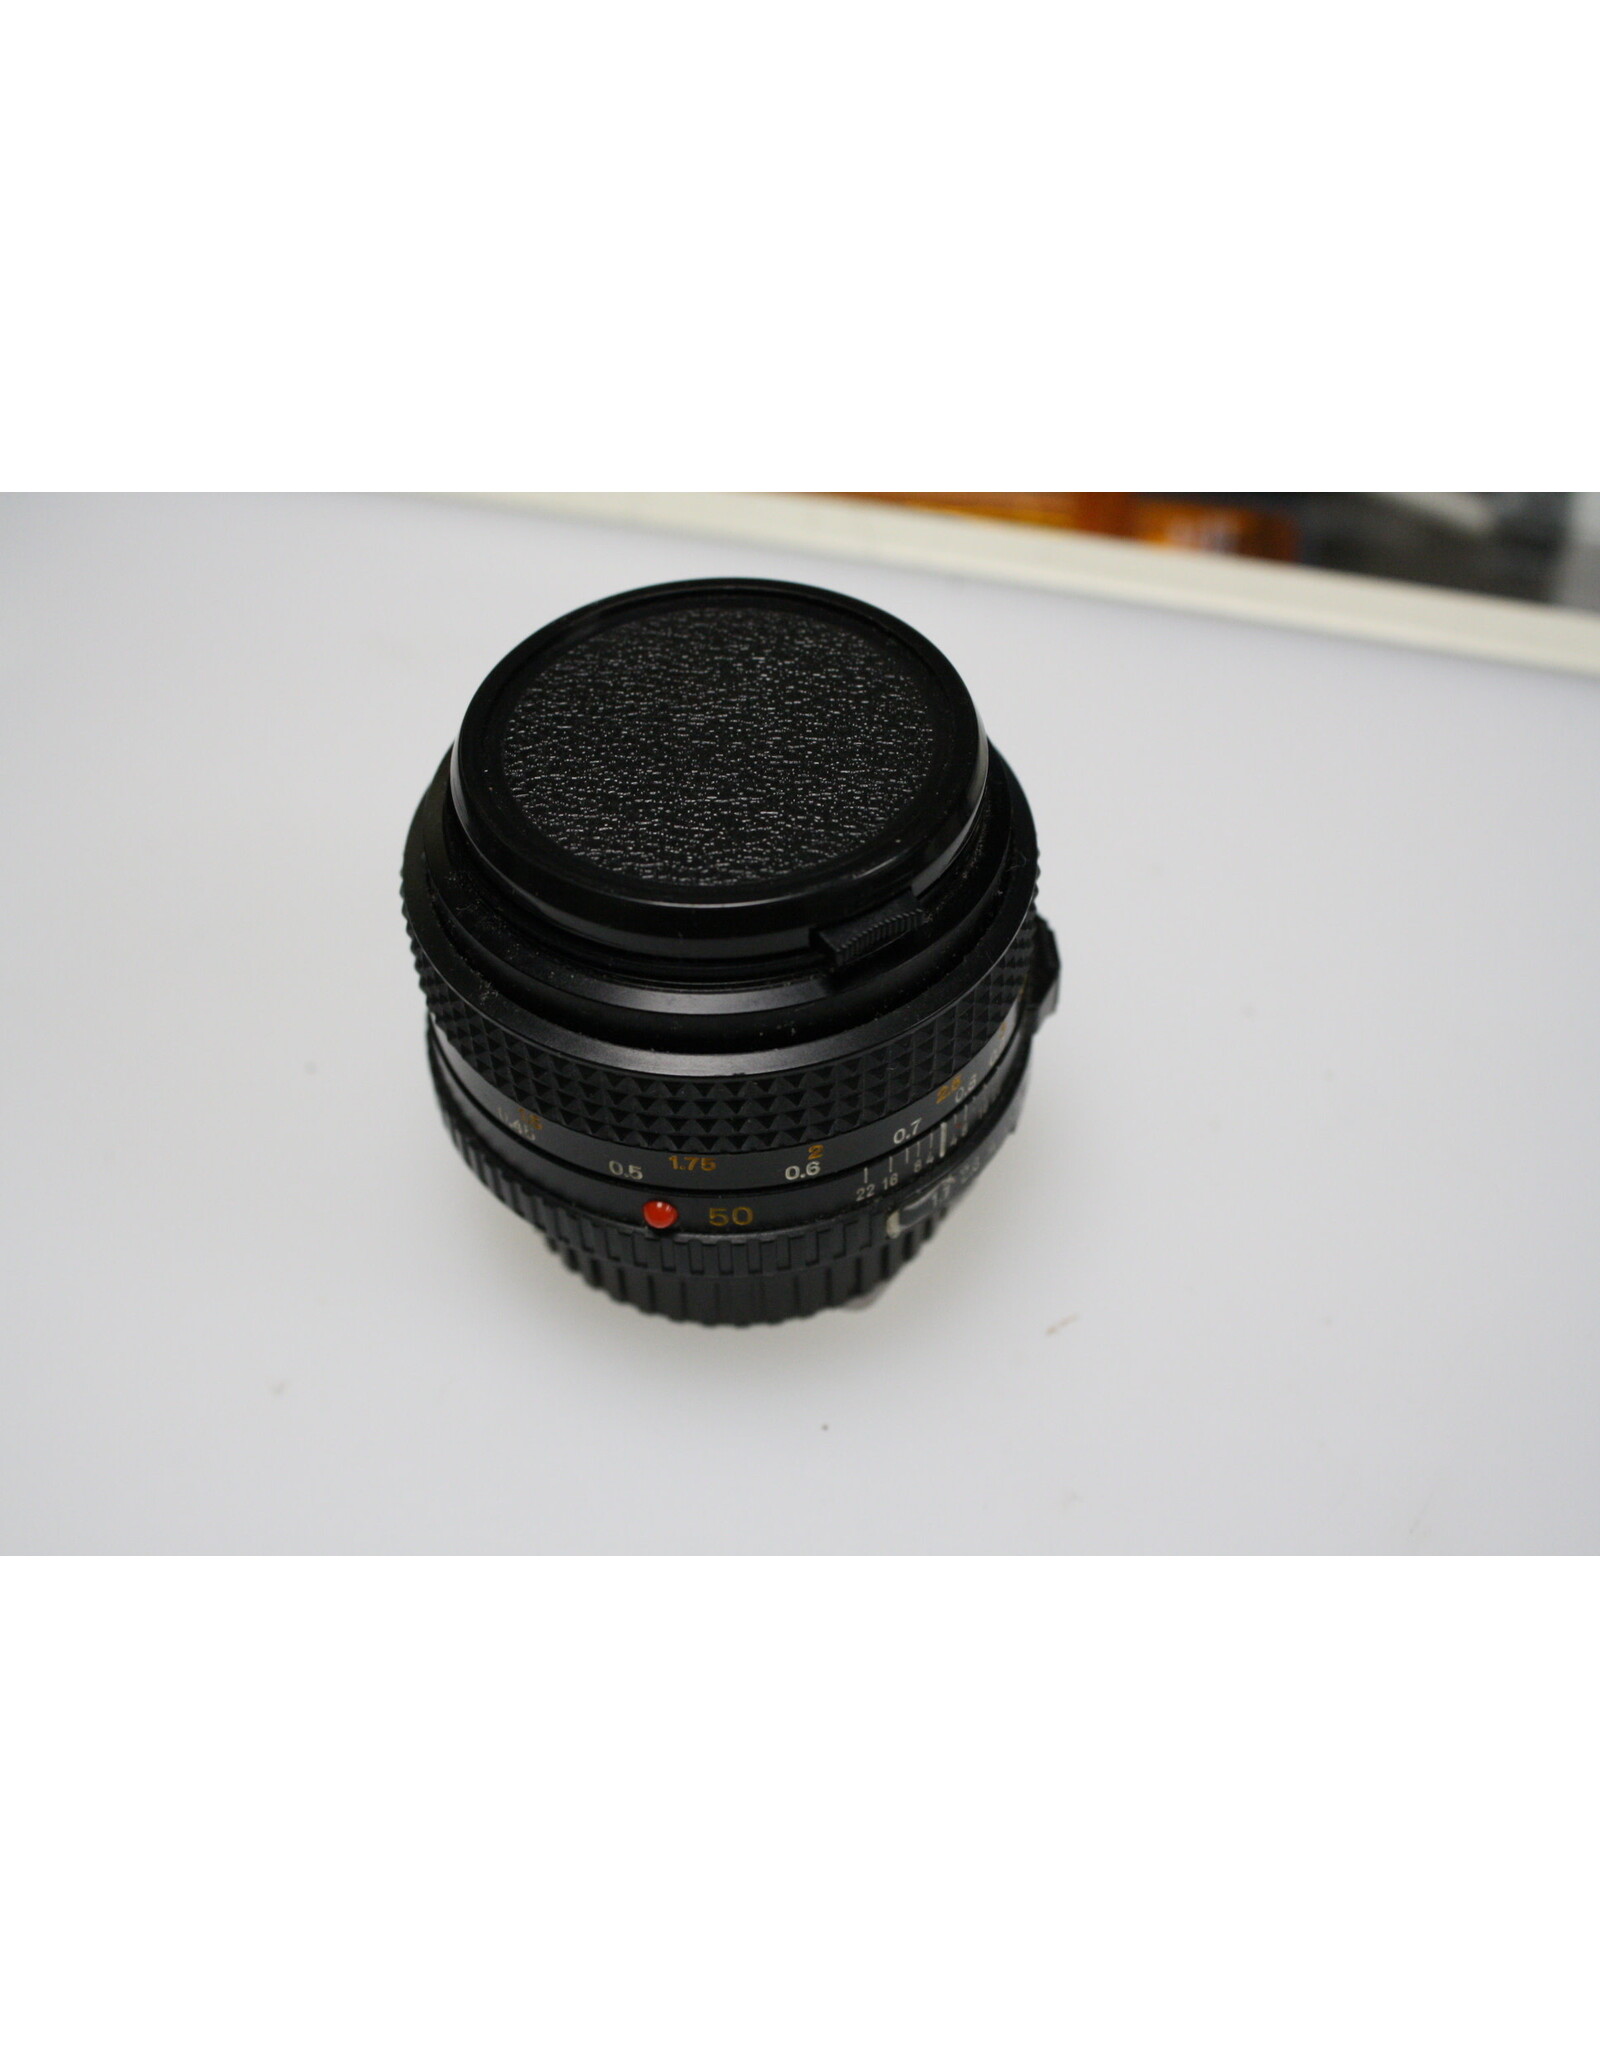 Konica Minolta Minolta MD 50mm f/1.7 Film SLR Lens